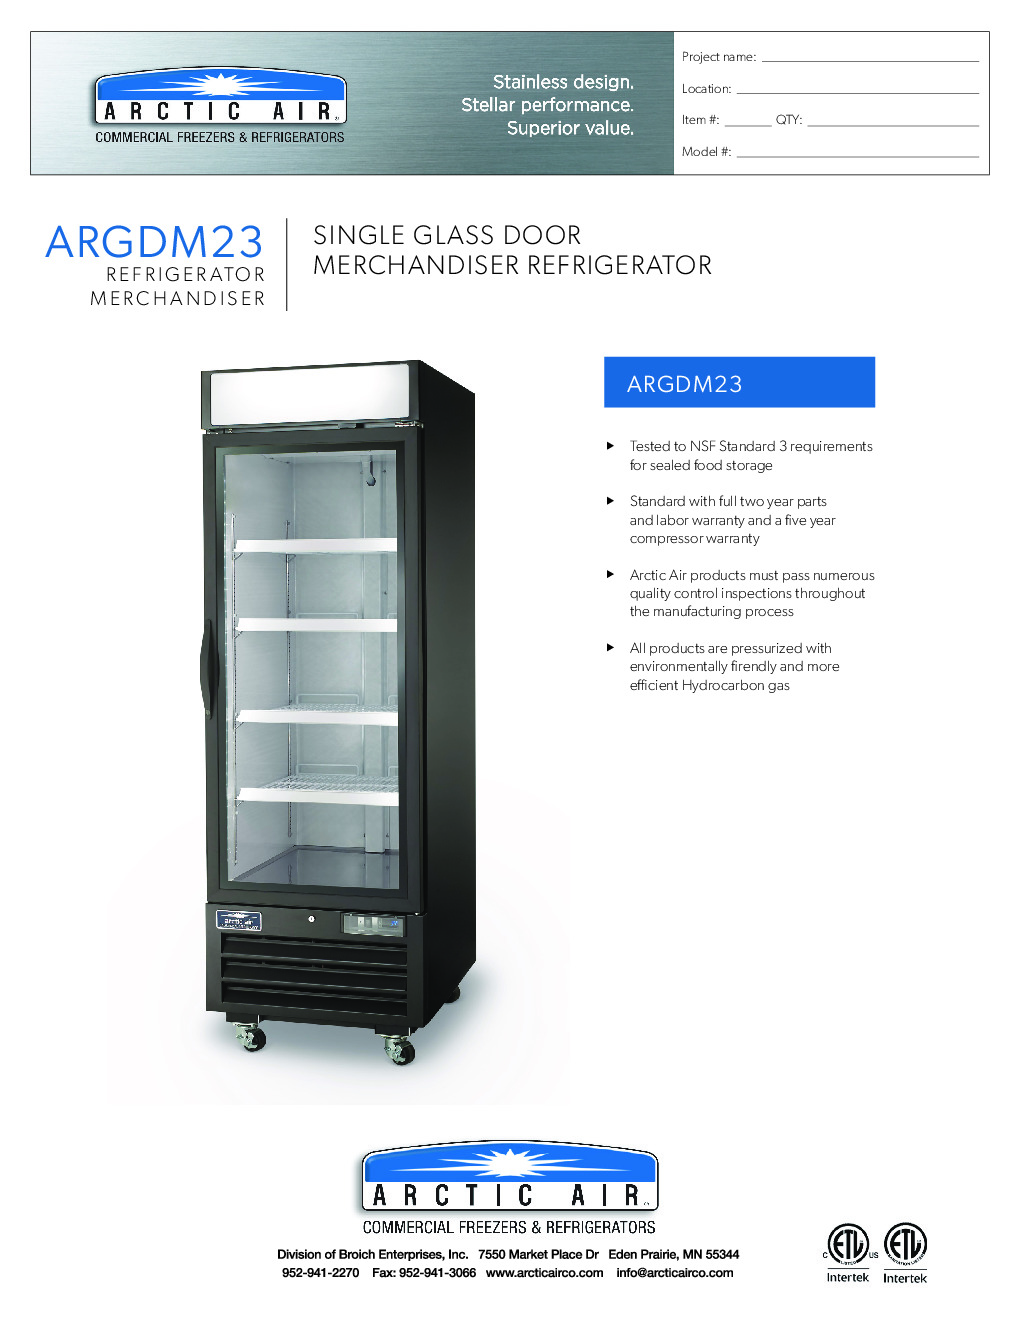 Arctic Air ARGDM23 Merchandiser Refrigerator